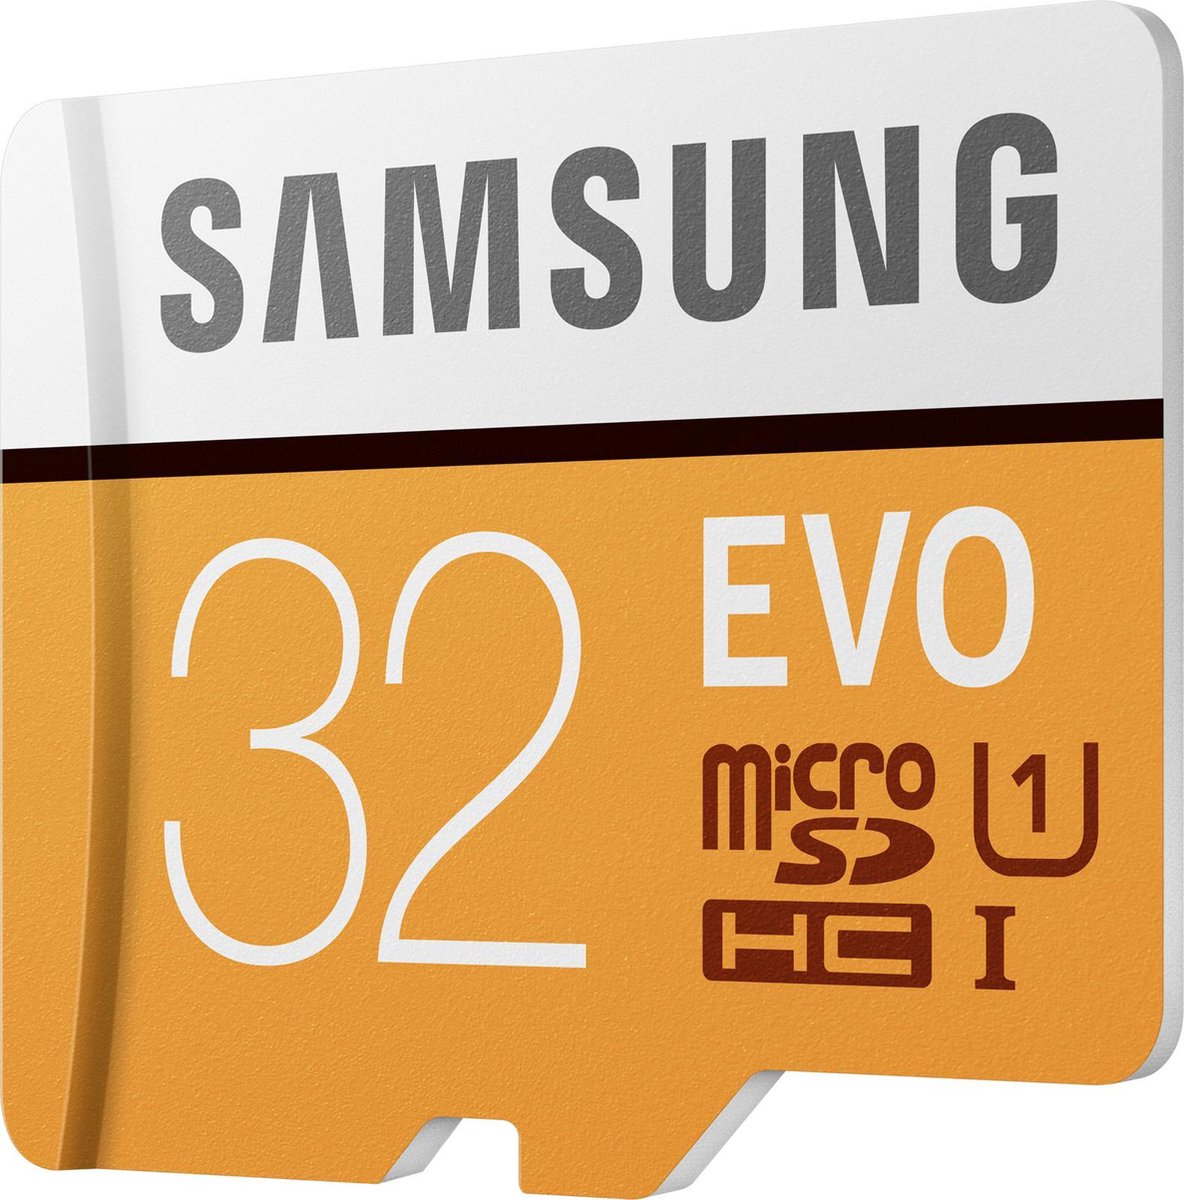 Samsung Evo SDXC 64 Go (48Mo/s) + adaptateur SD - Carte mémoire